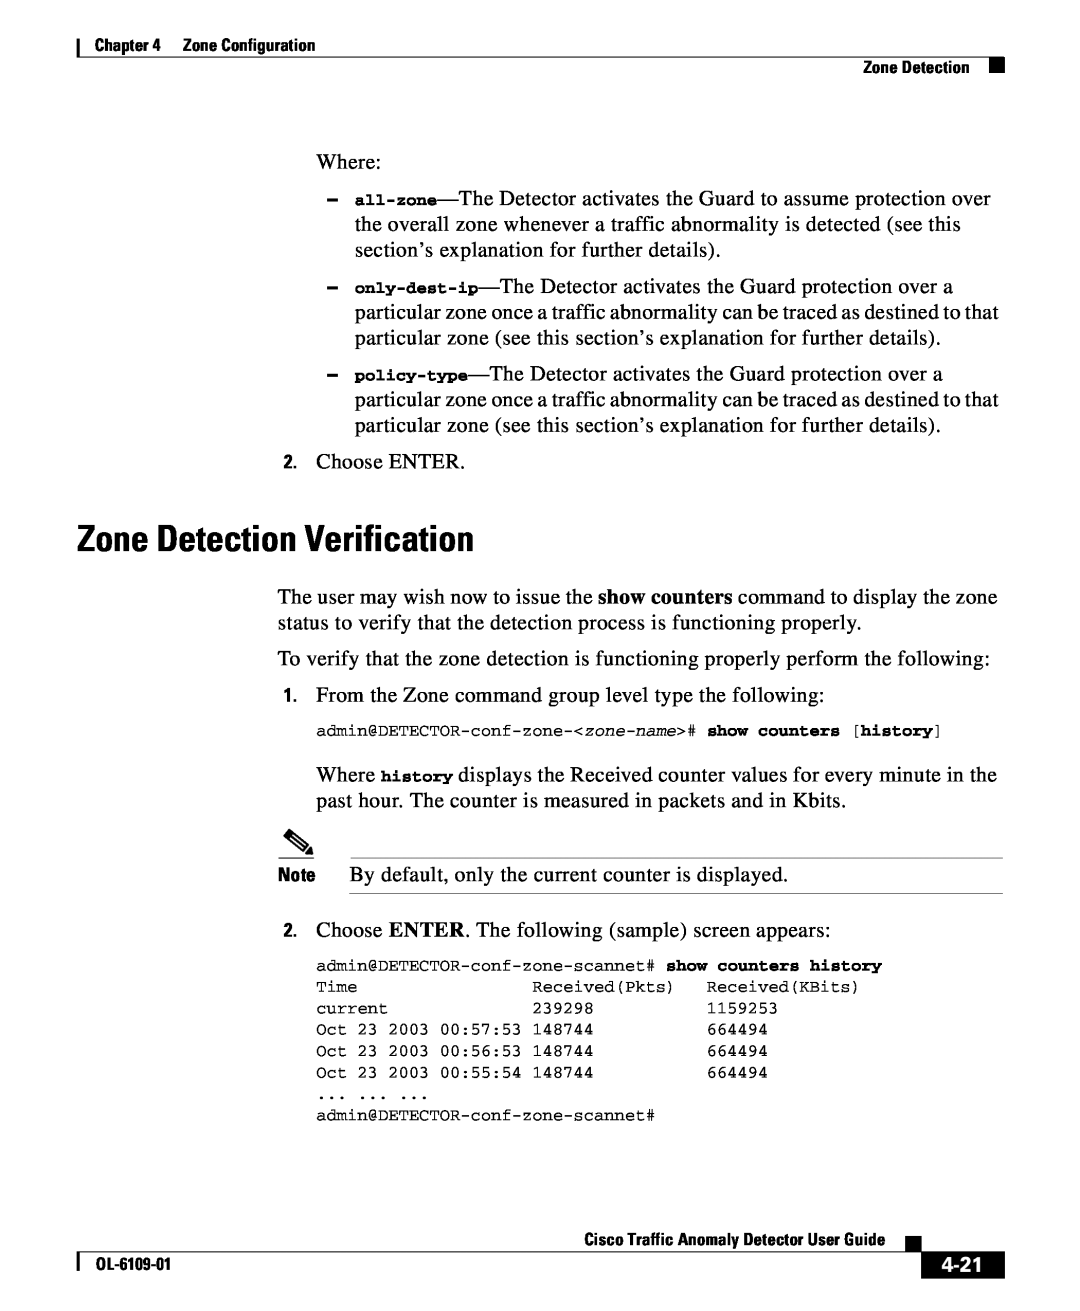 Cisco Systems OL-6109-01 manual Zone Detection Verification, 4-21 